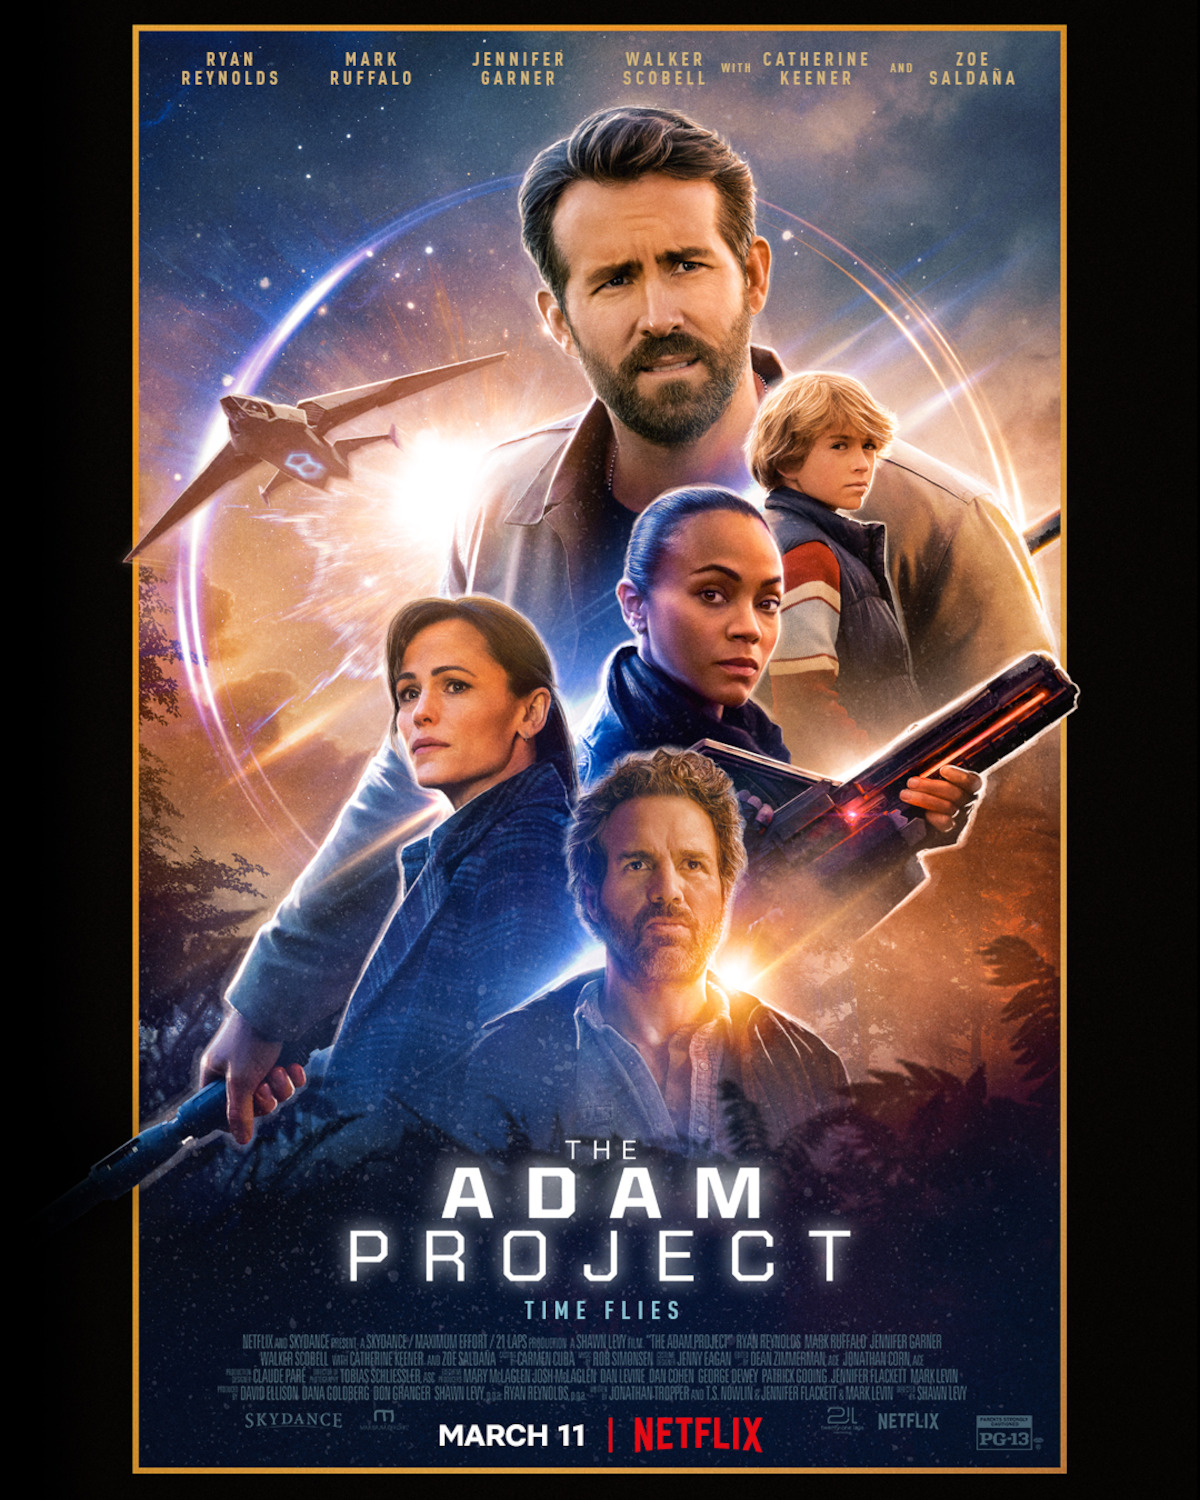 The Adam Project Trailer WATCH